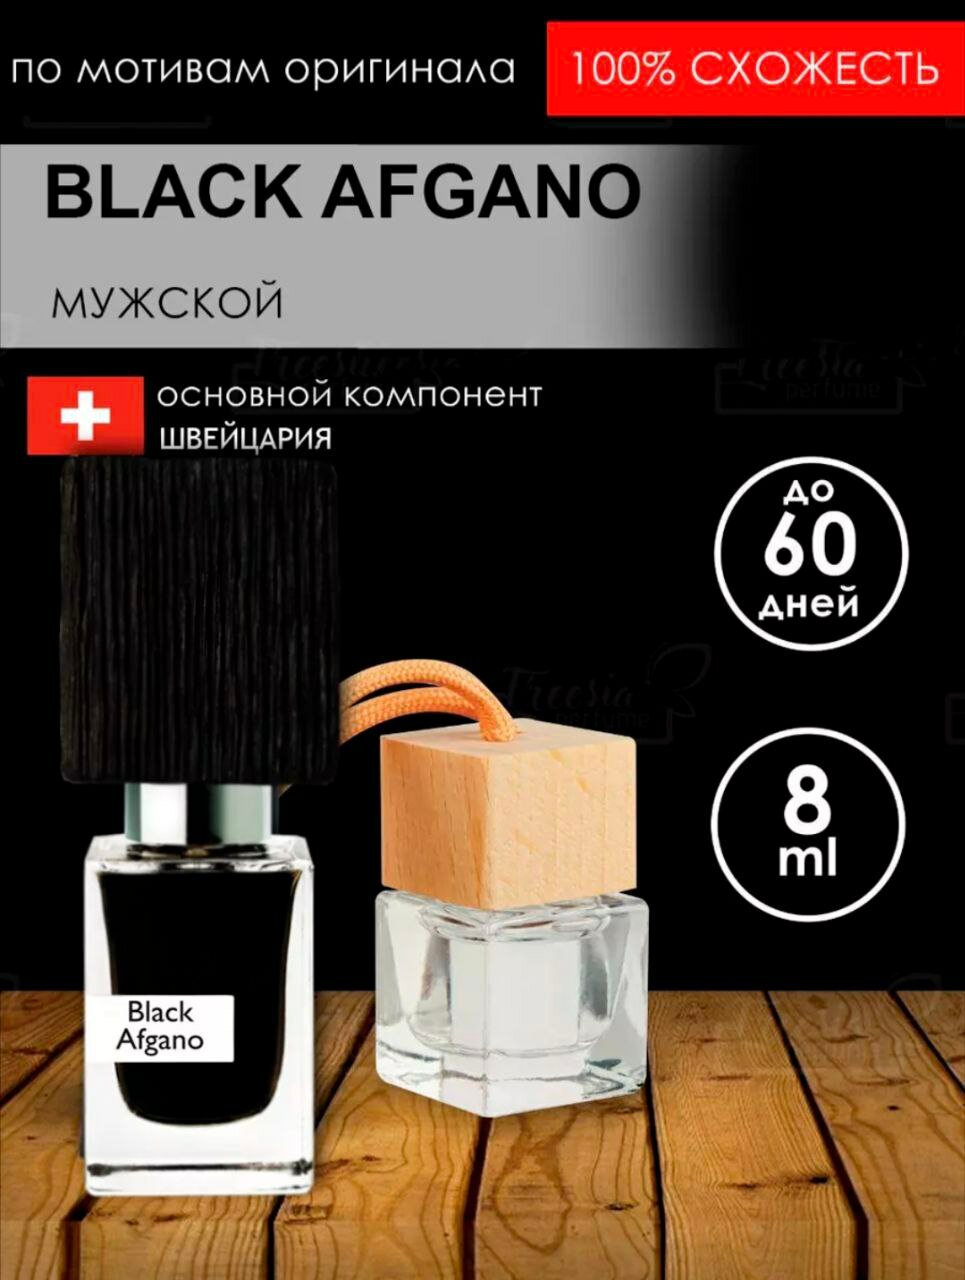 Fleur Perfume Black Afgano Автопарфюм 7 мл / Ароматизатор для автомобиля и дома